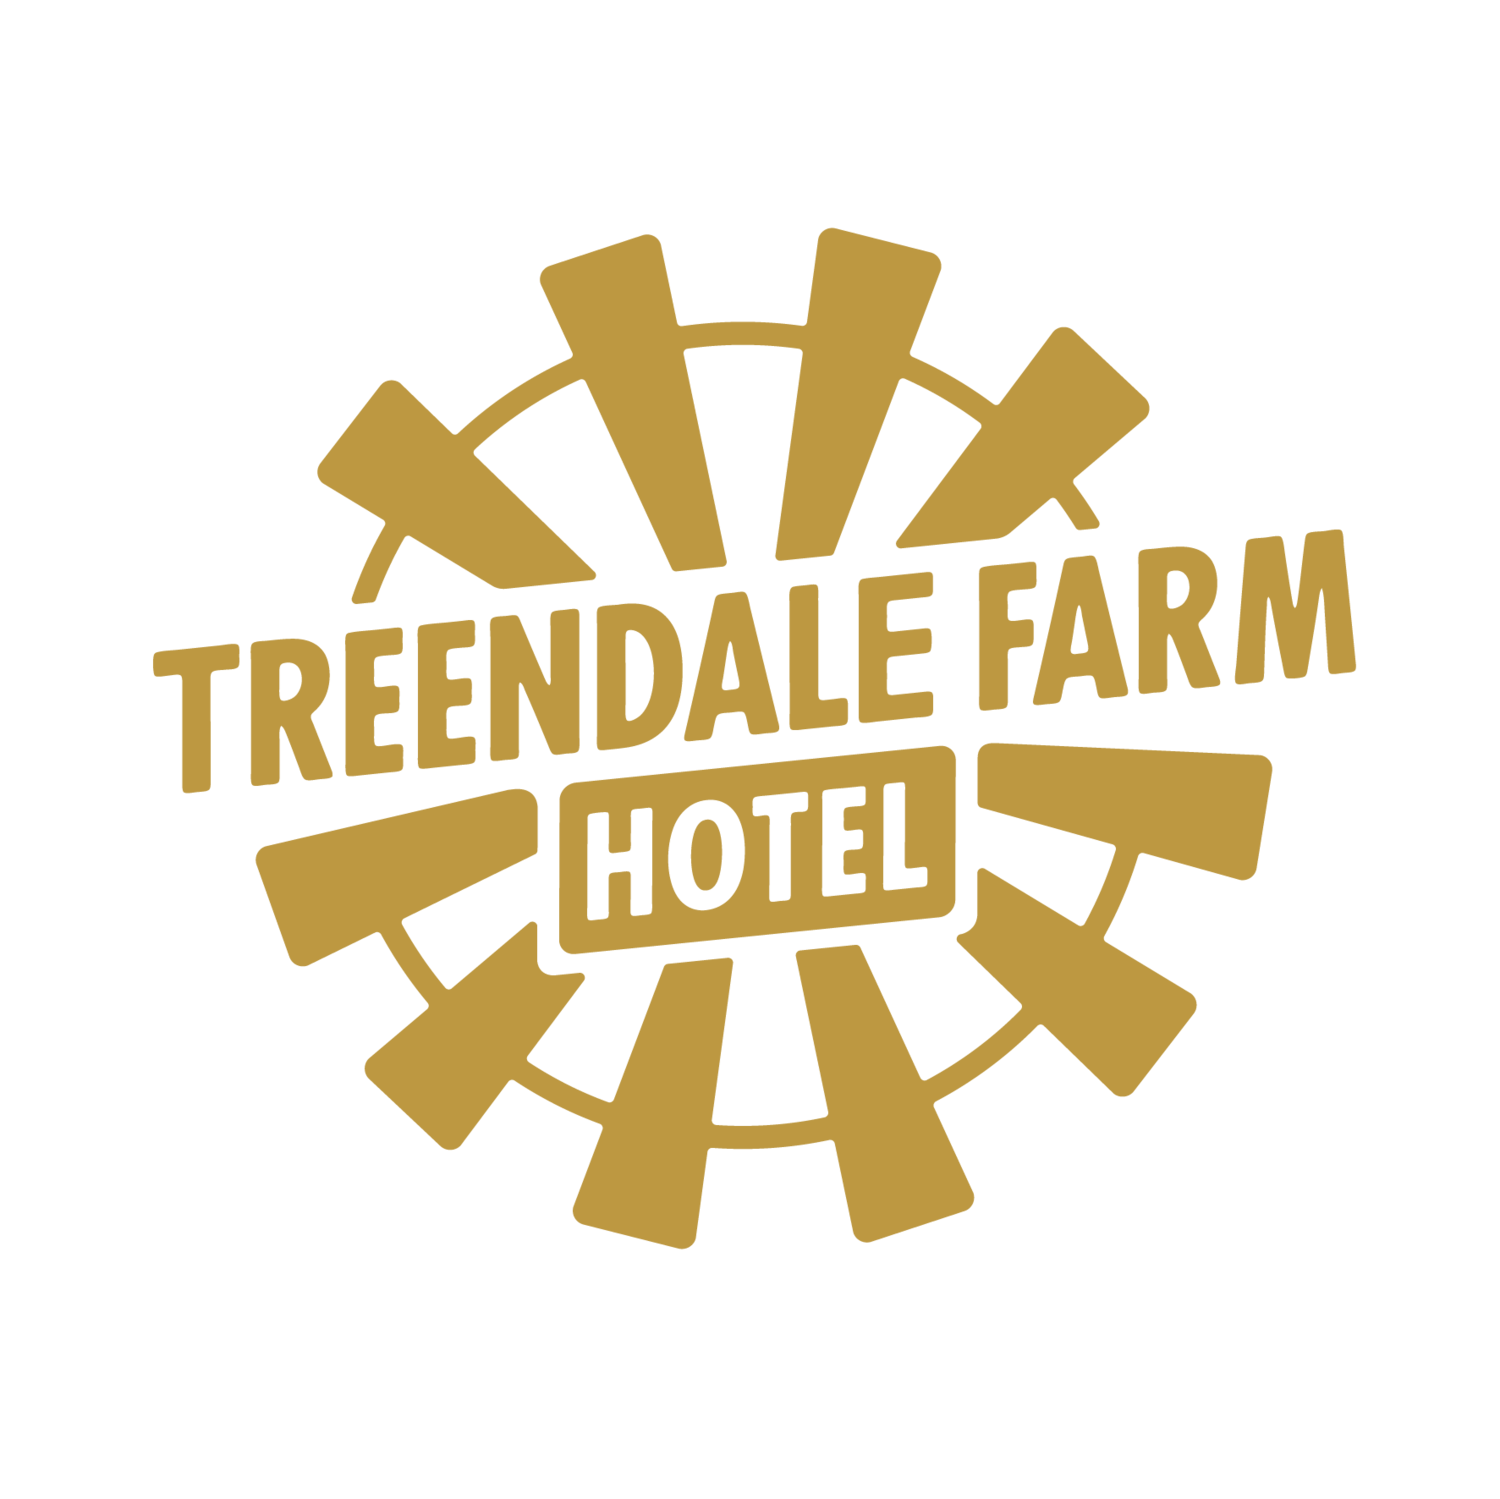 Treendale Farm Hotel